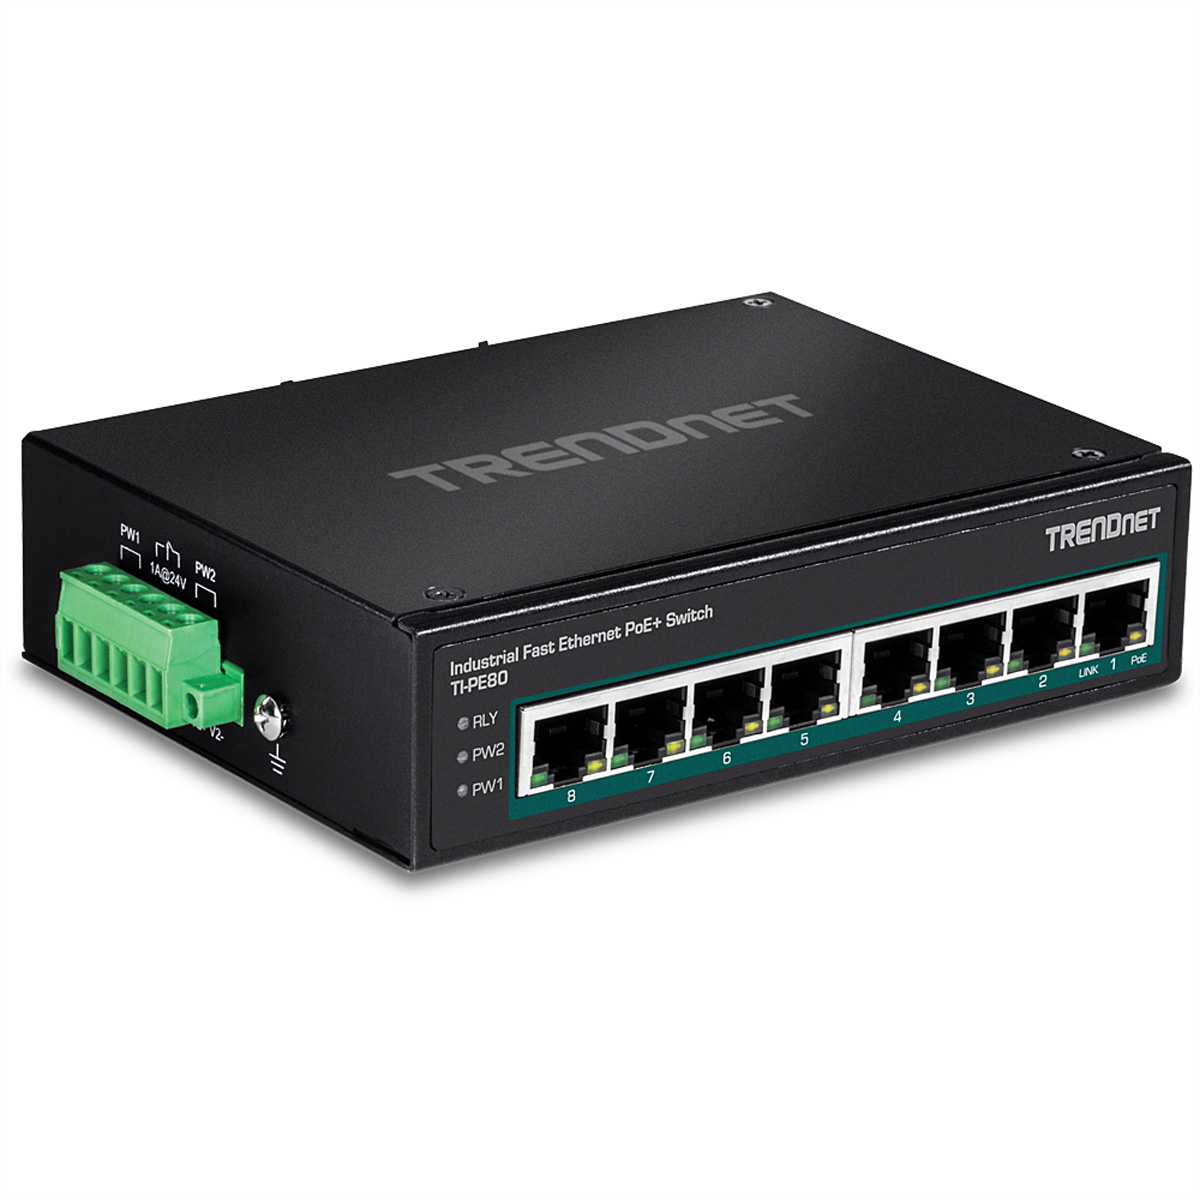 TRENDNET TI-PE80 Industrial Fast Ethernet Switch Fast DIN-Rail Ethernet PoE 8-Port PoE+ Switch